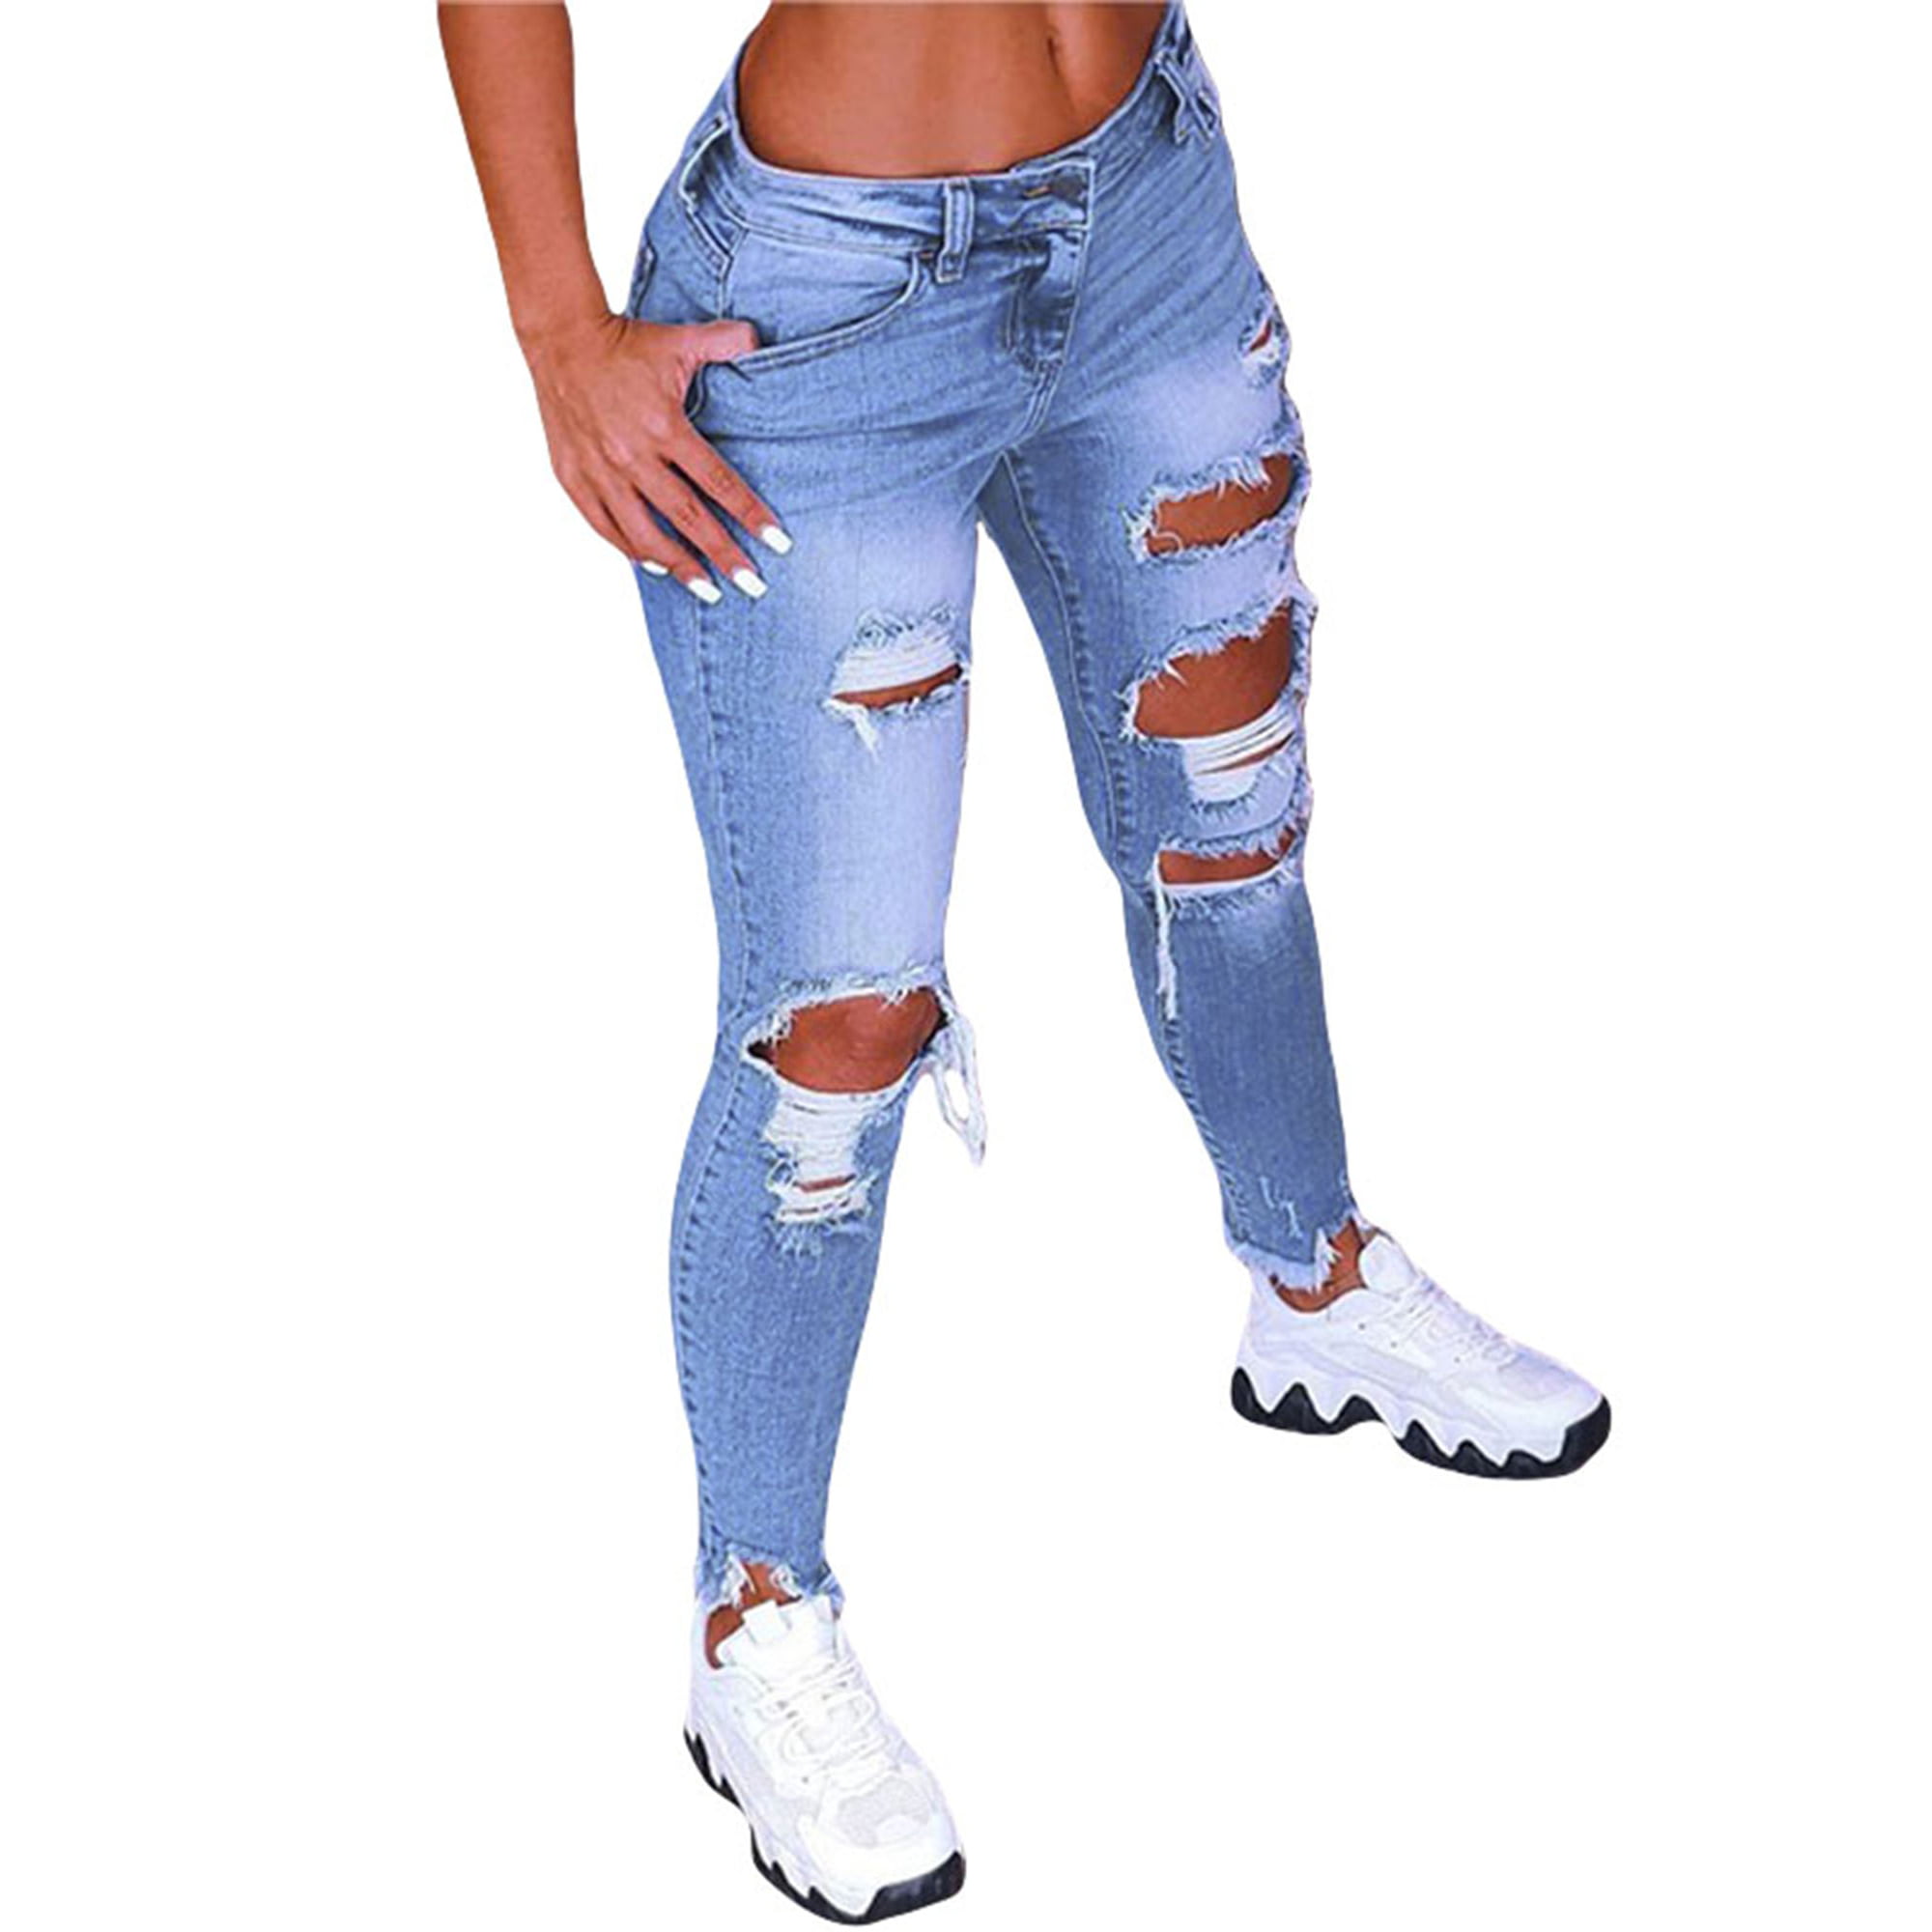 UKAP Stretch Slim Fit Skinny Leg Jeans Low Rise Curvy Light Washed Denim Jegging - Walmart.com